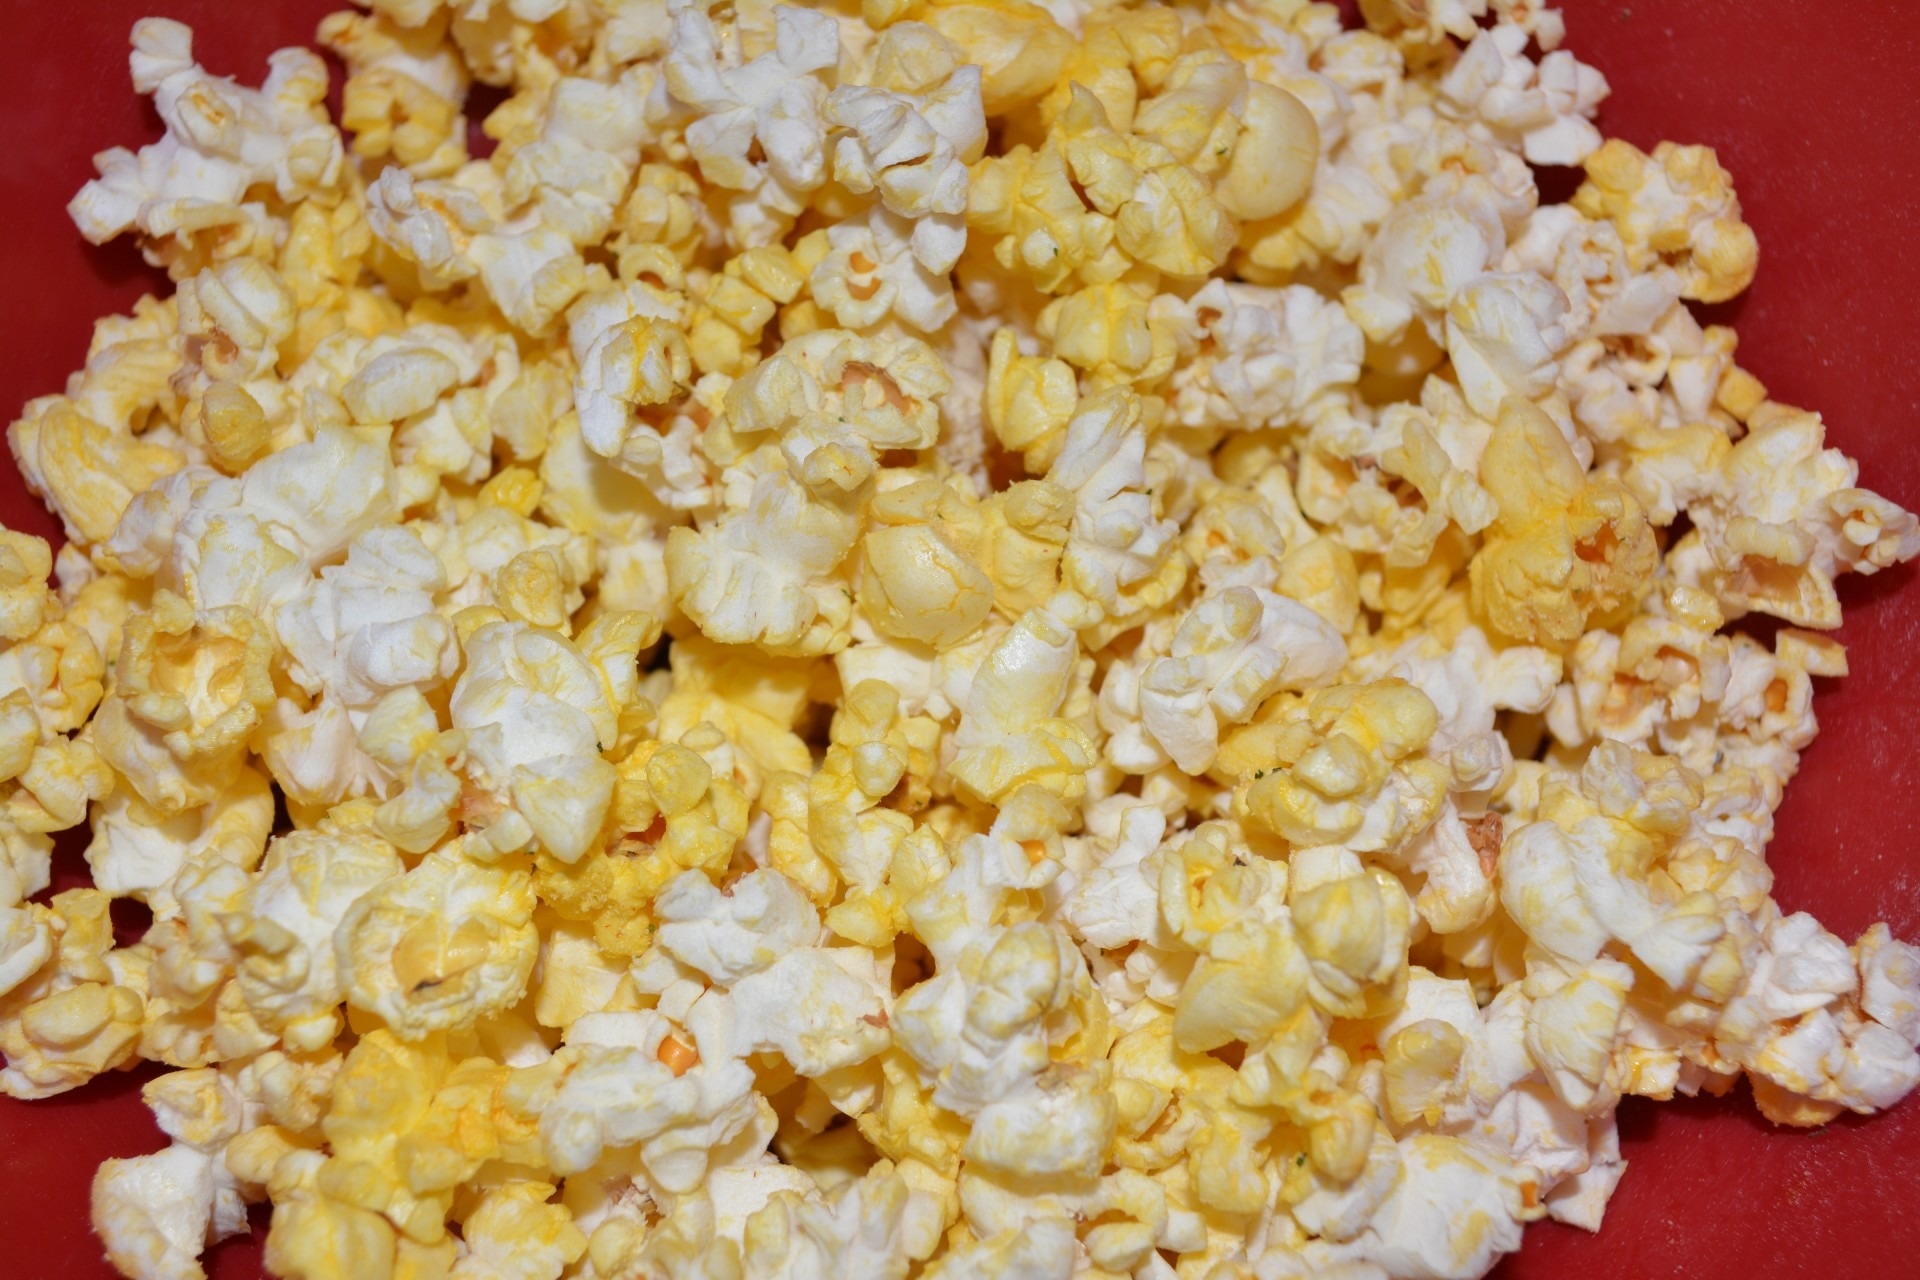 yellow and white popcorn lot